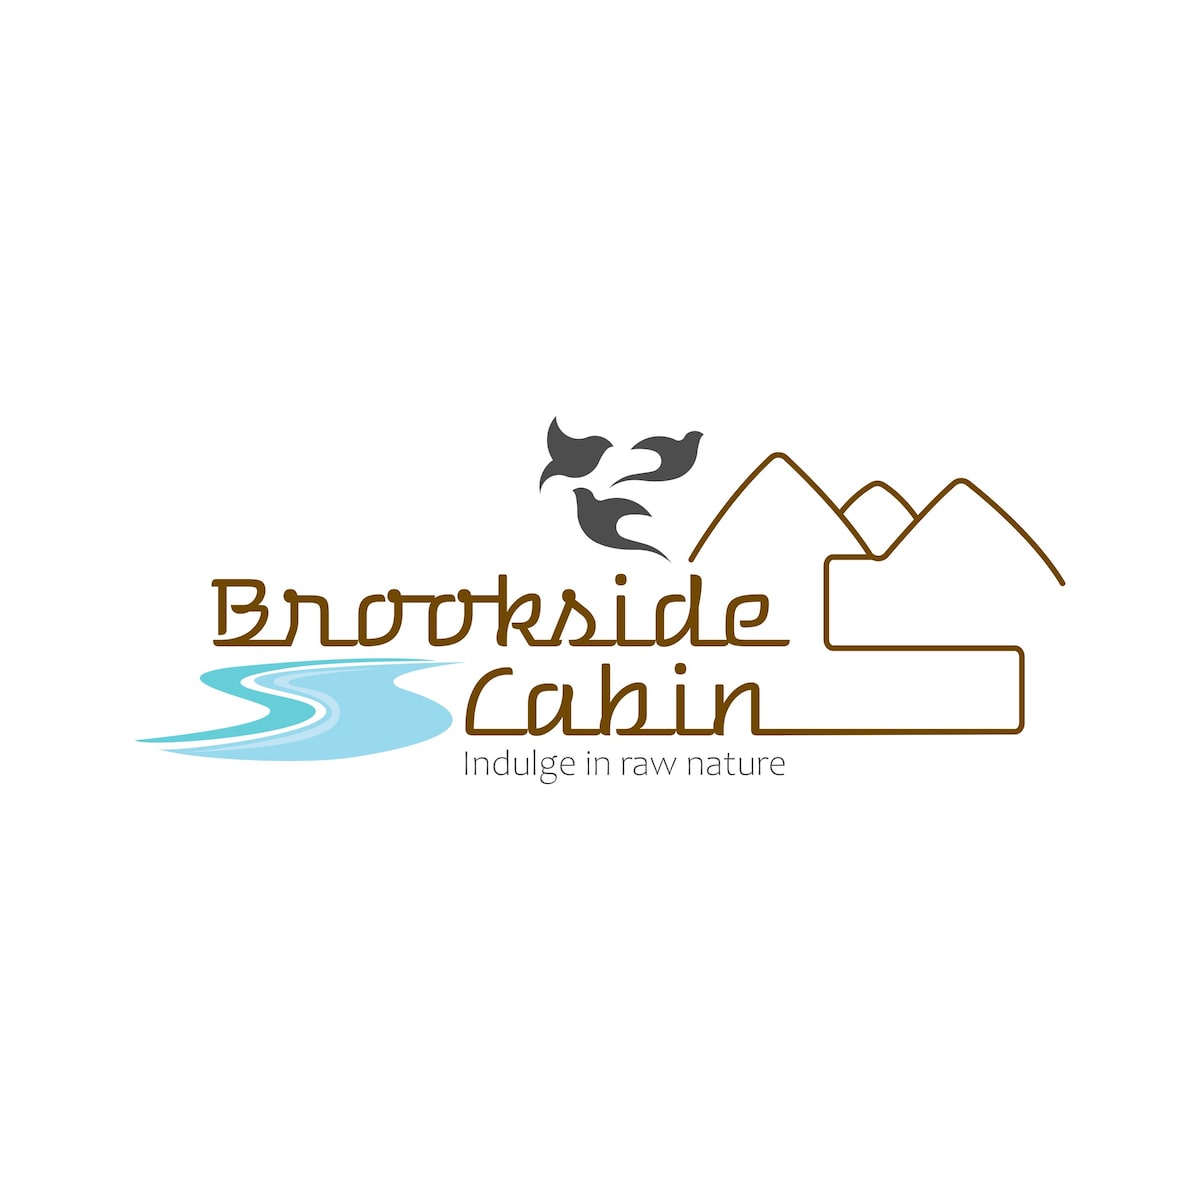 Brookside cabin